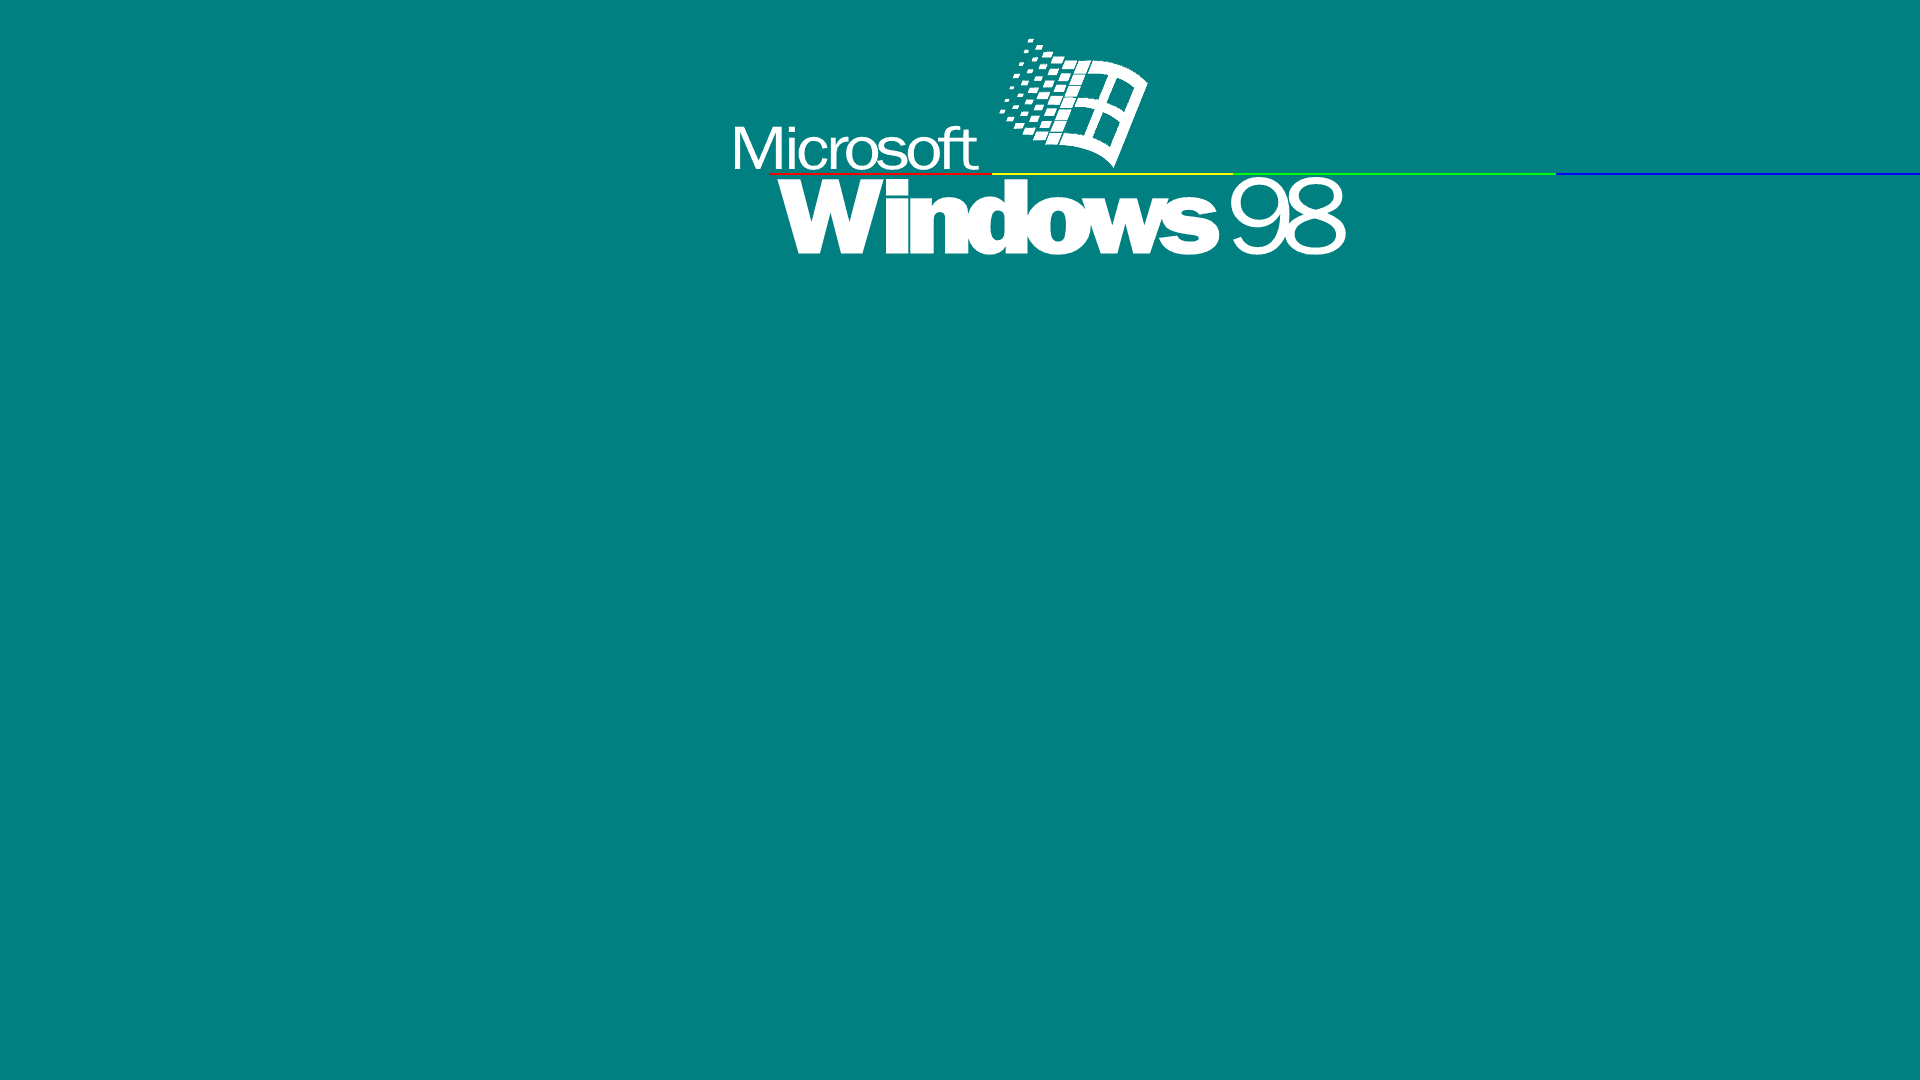 Windows 98 Logo In Teal